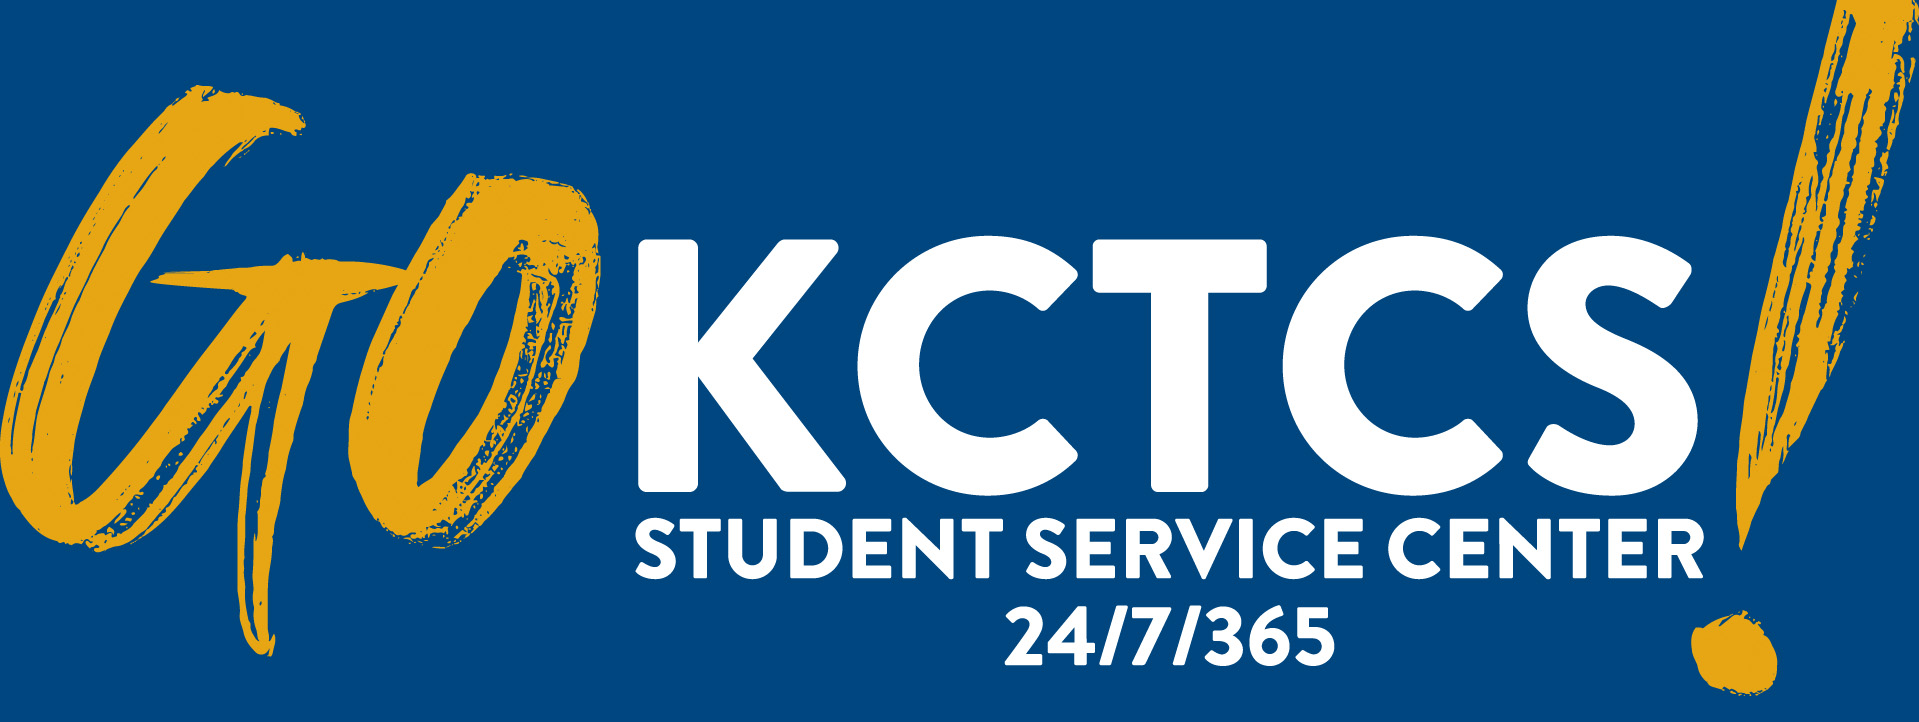 Go KCTCS black and white logo